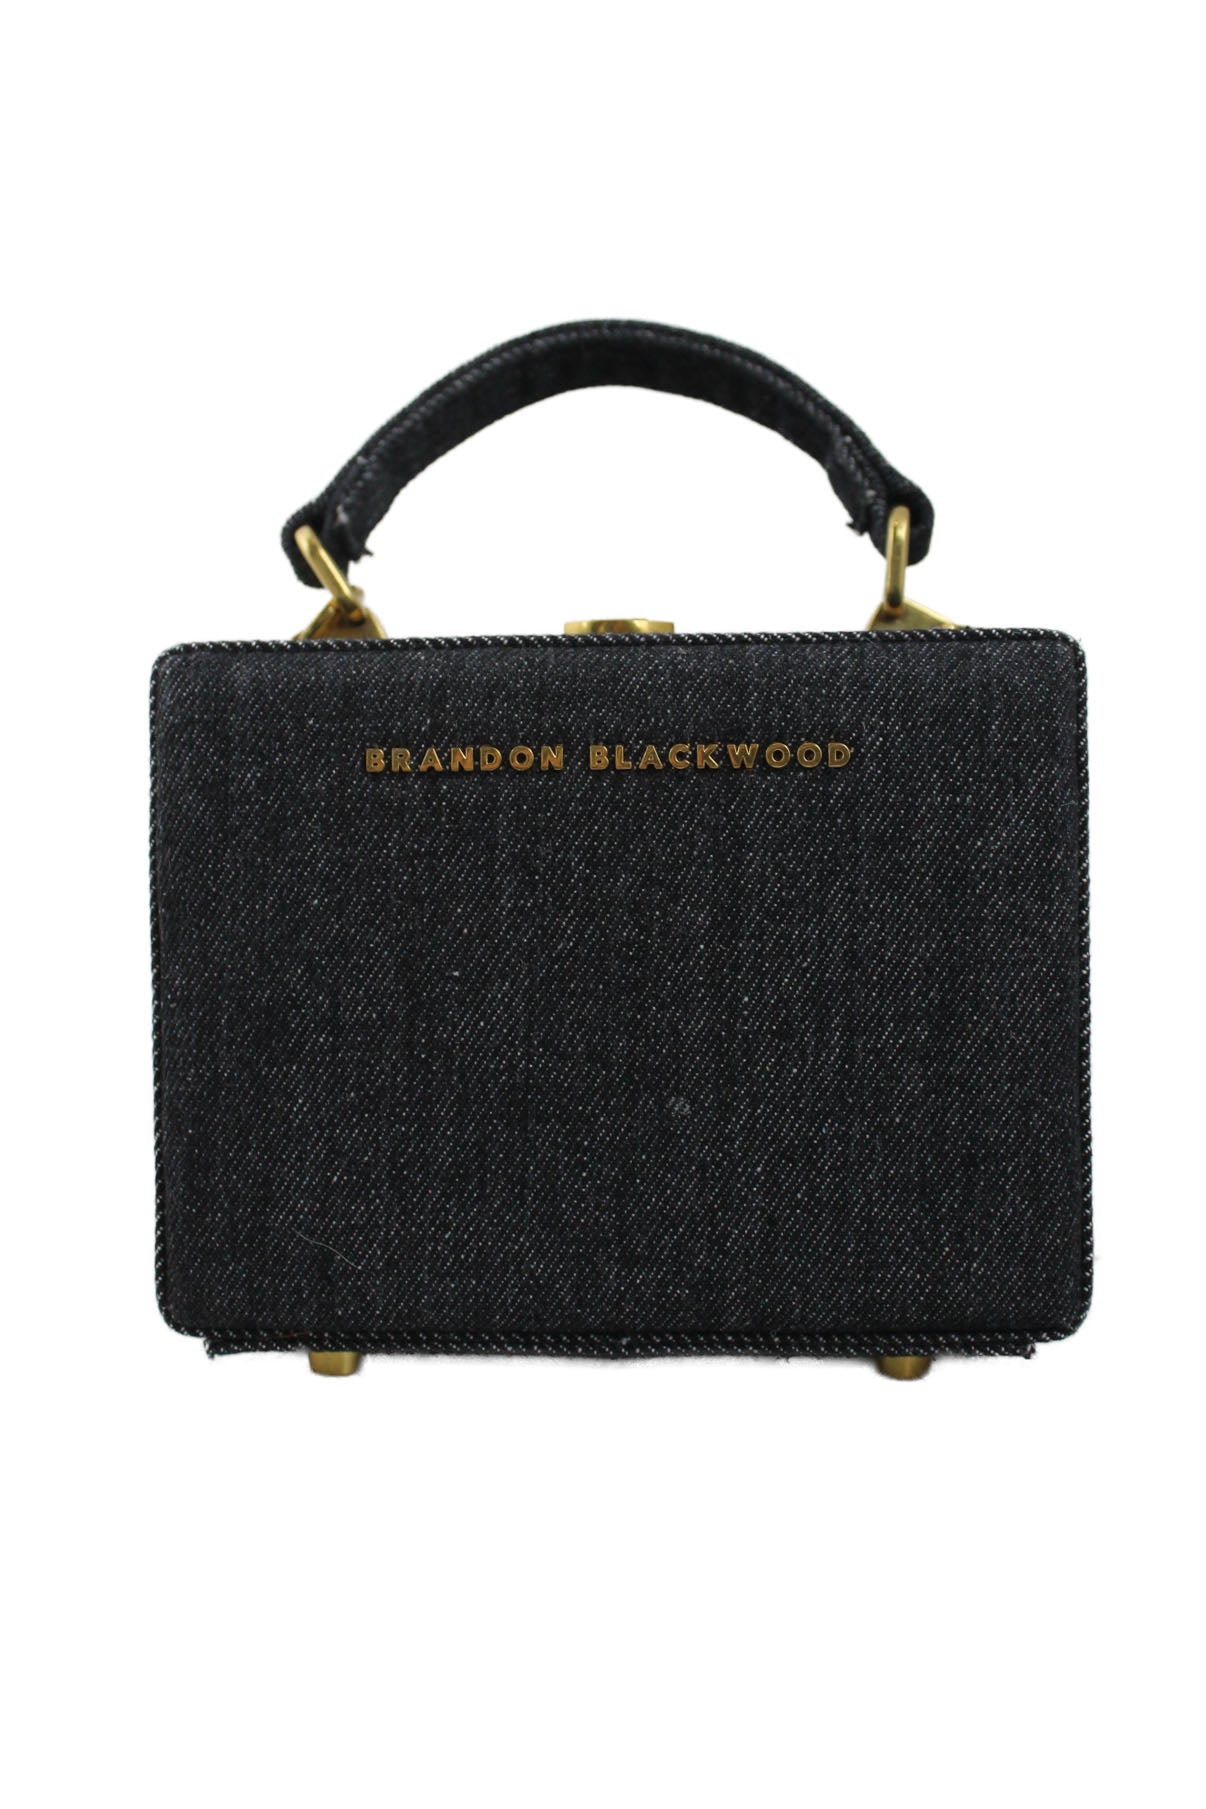 description: brandon blackwood dark denim mini purse. features gold-tone metal hardware throughout, adjustable/detachable crossbody strap, and lock on closure. comes with dust bag. 